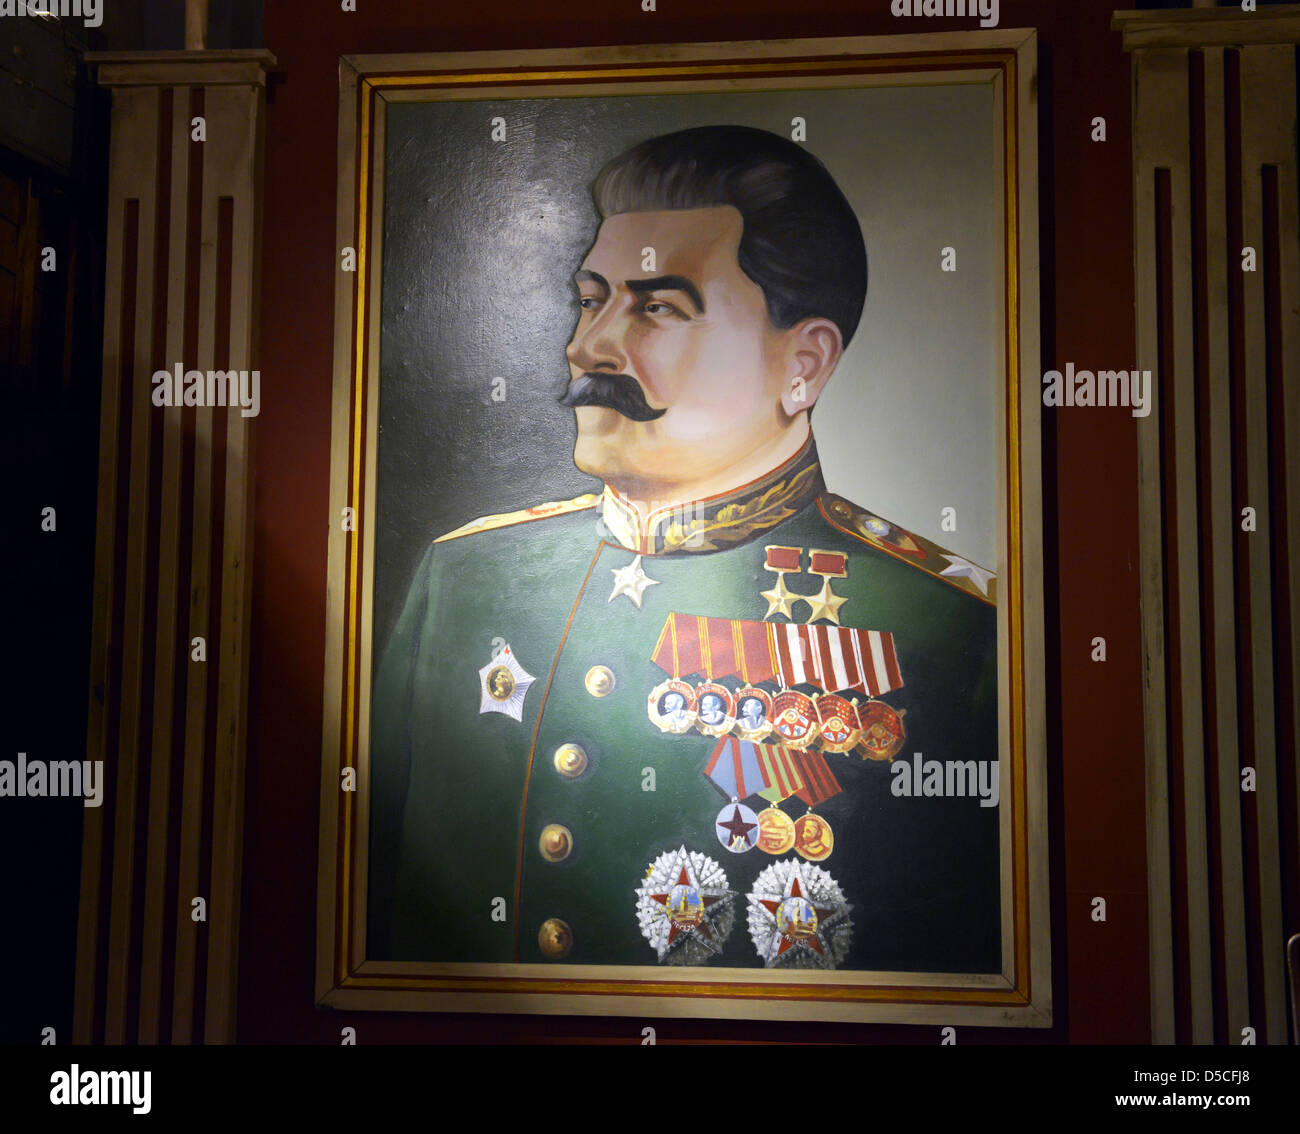 La pittura di Stalin in mostra a Oskar Schindler Fabbrica e Museo, Cracovia in Polonia Foto Stock